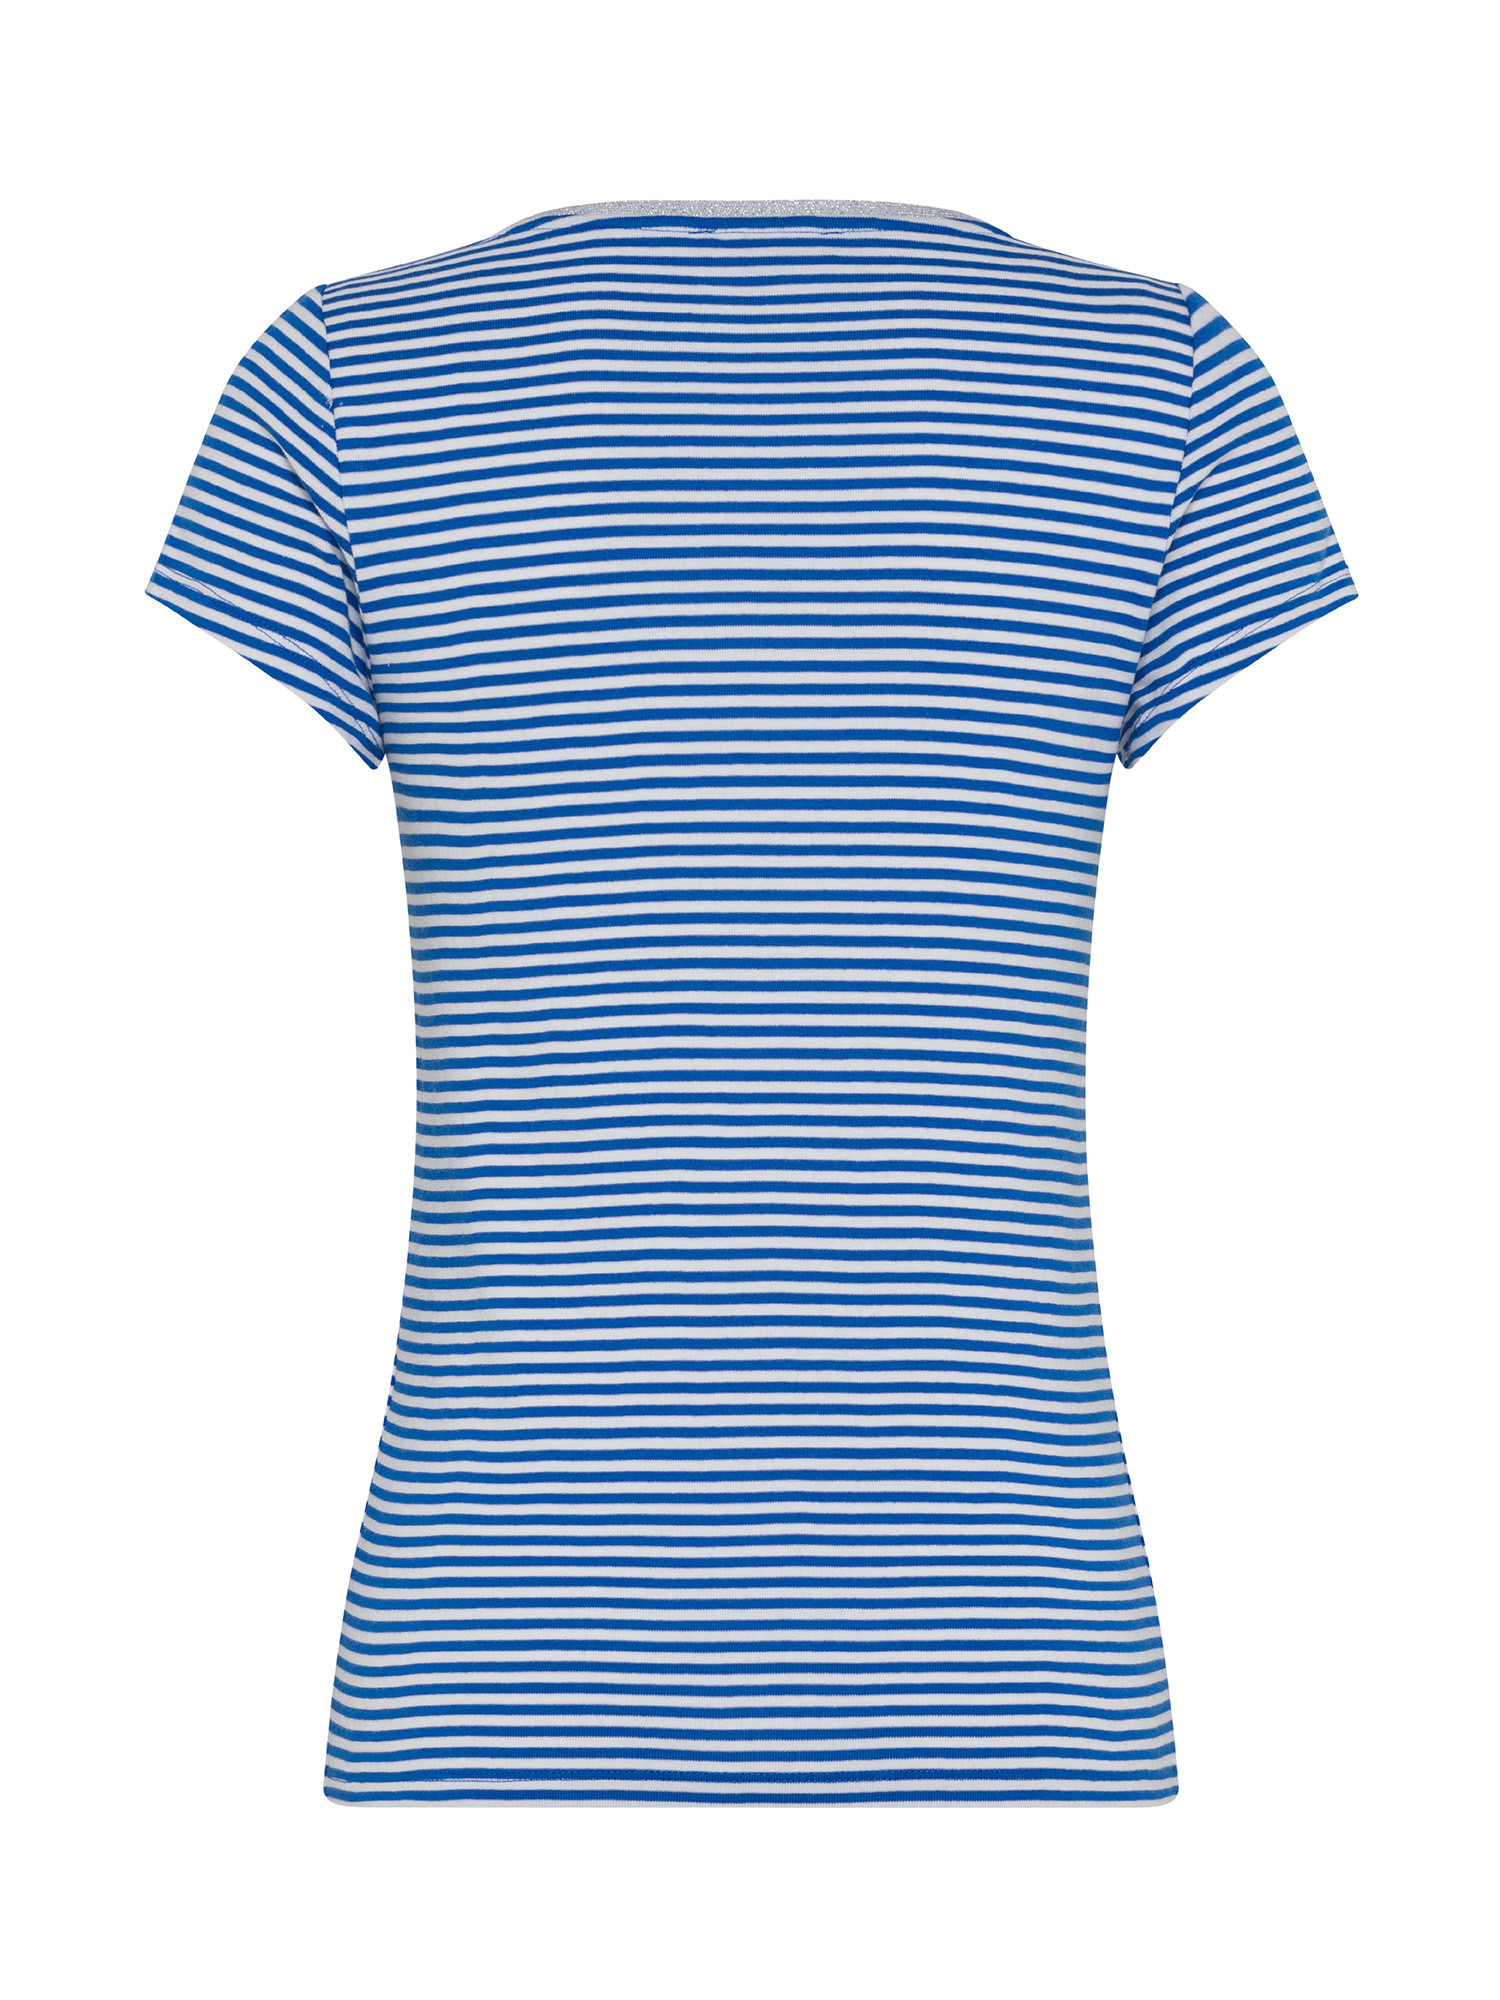 Koan - Striped cotton T-shirt, Royal Blue, large image number 1